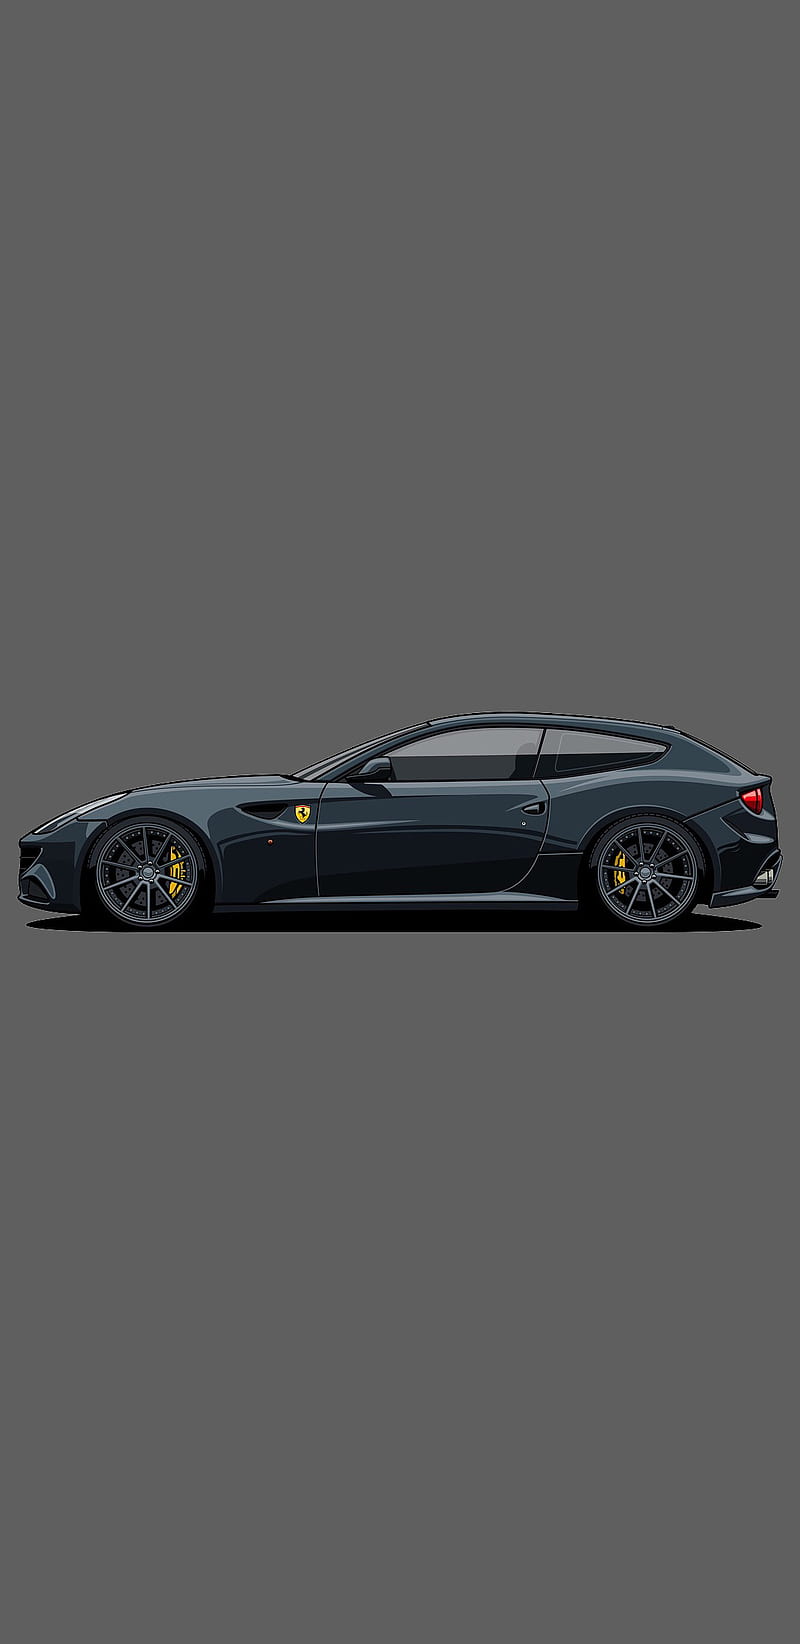 Concept car sketch HD wallpapers free download | Wallpaperbetter